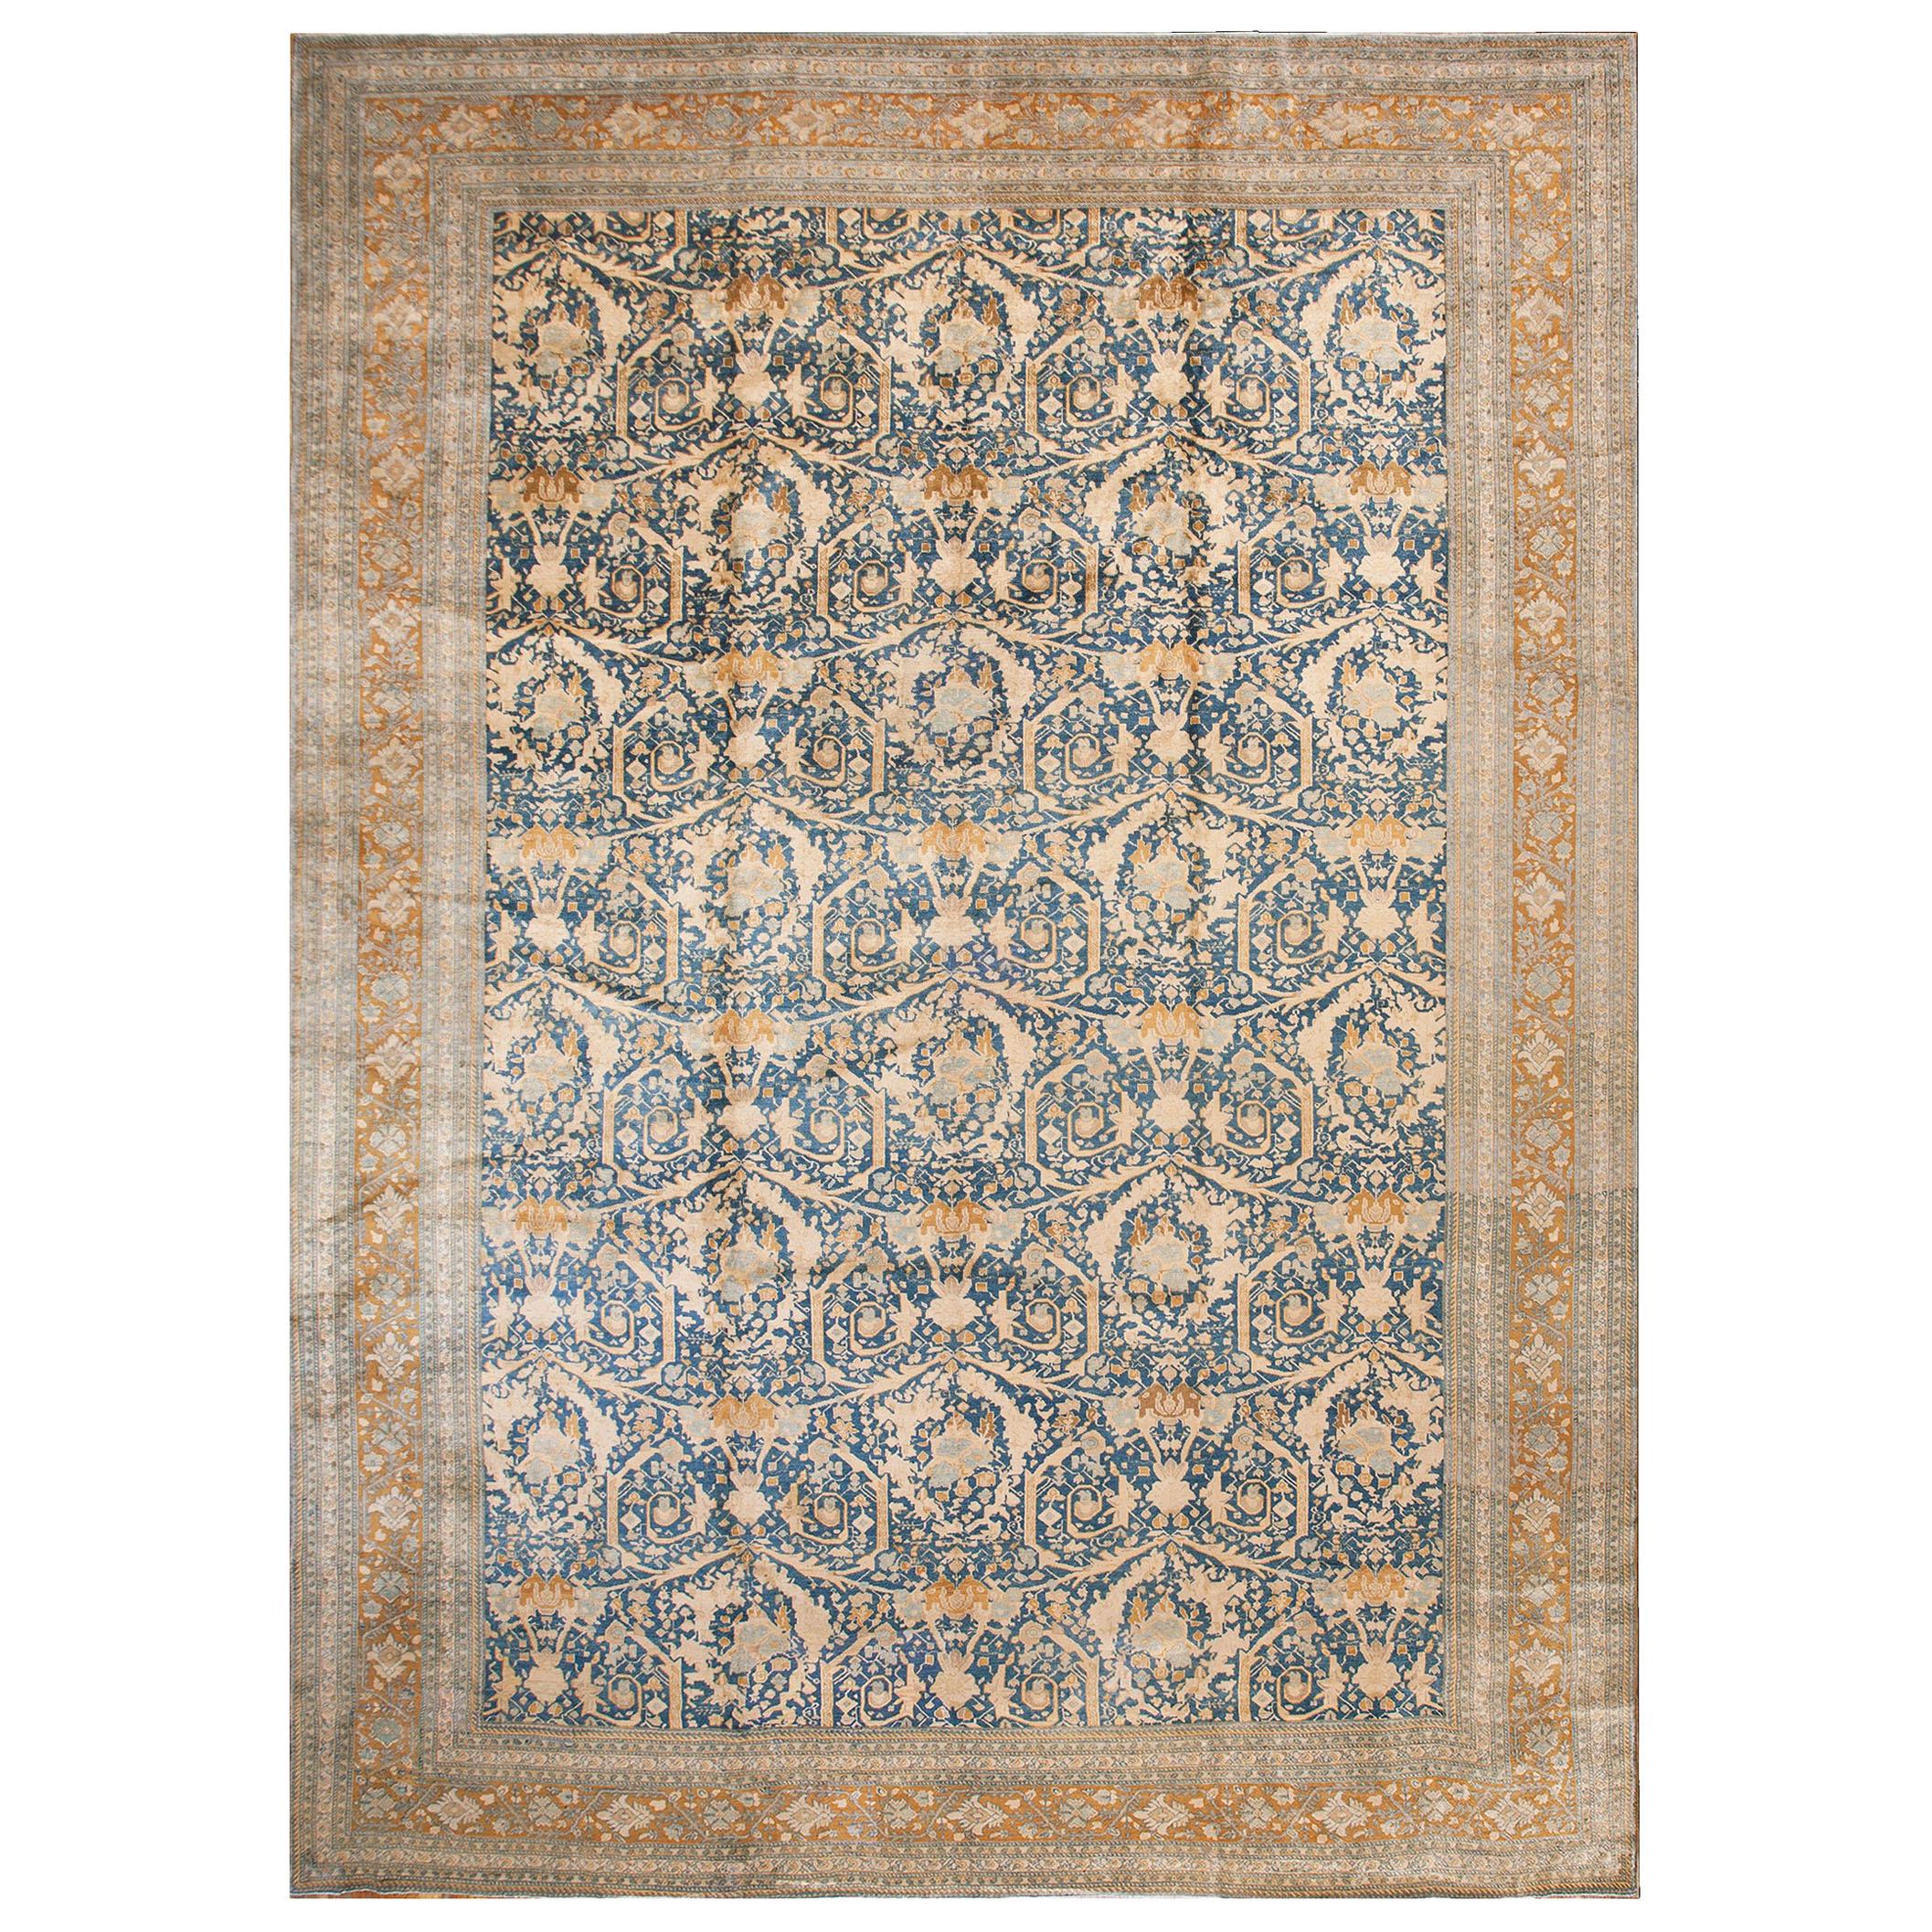 Early 20th Century Persian Tabriz Carpet ( 11' 6" x 16' - 350 x 485 cm ) For Sale